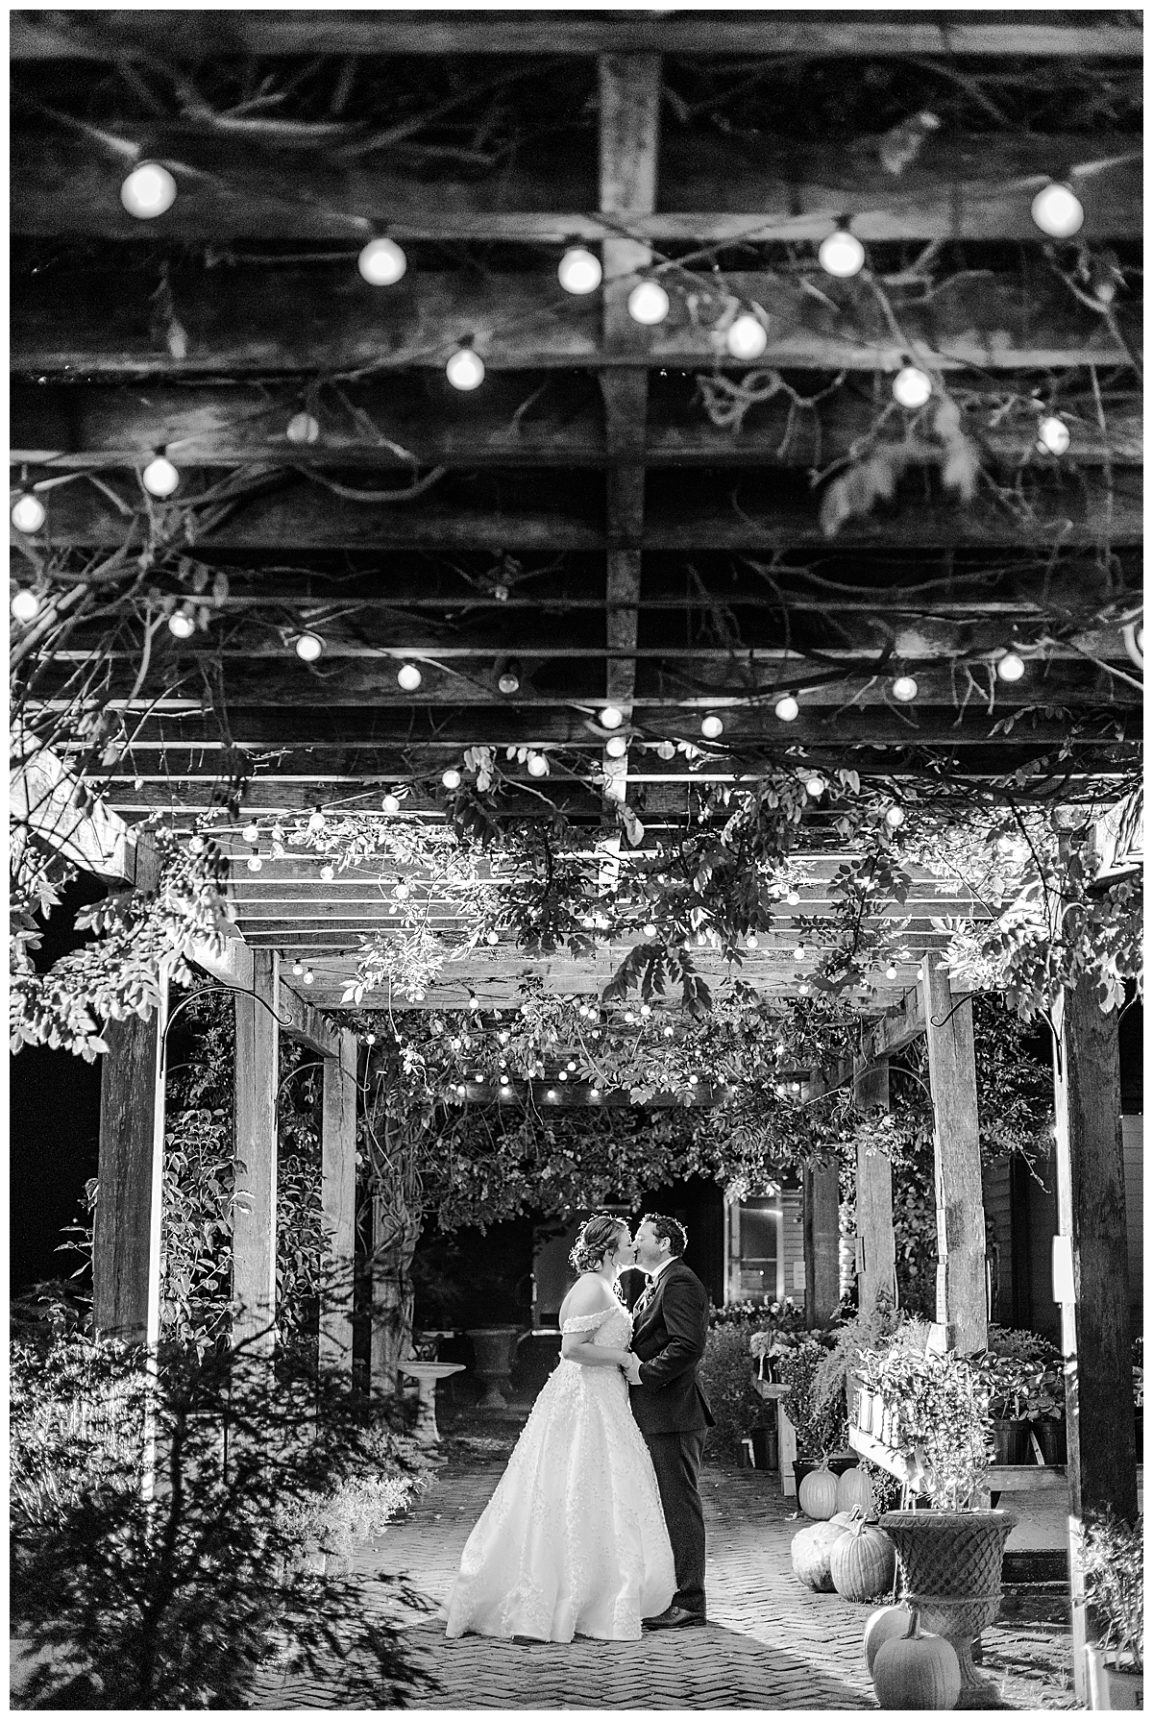 The Market at Grelen; Somerset Weddings; Somerset Wedding Venue; Brooke Danielle Photography; Charlottesville Weddings; Charlottesville Wedding Photographer;